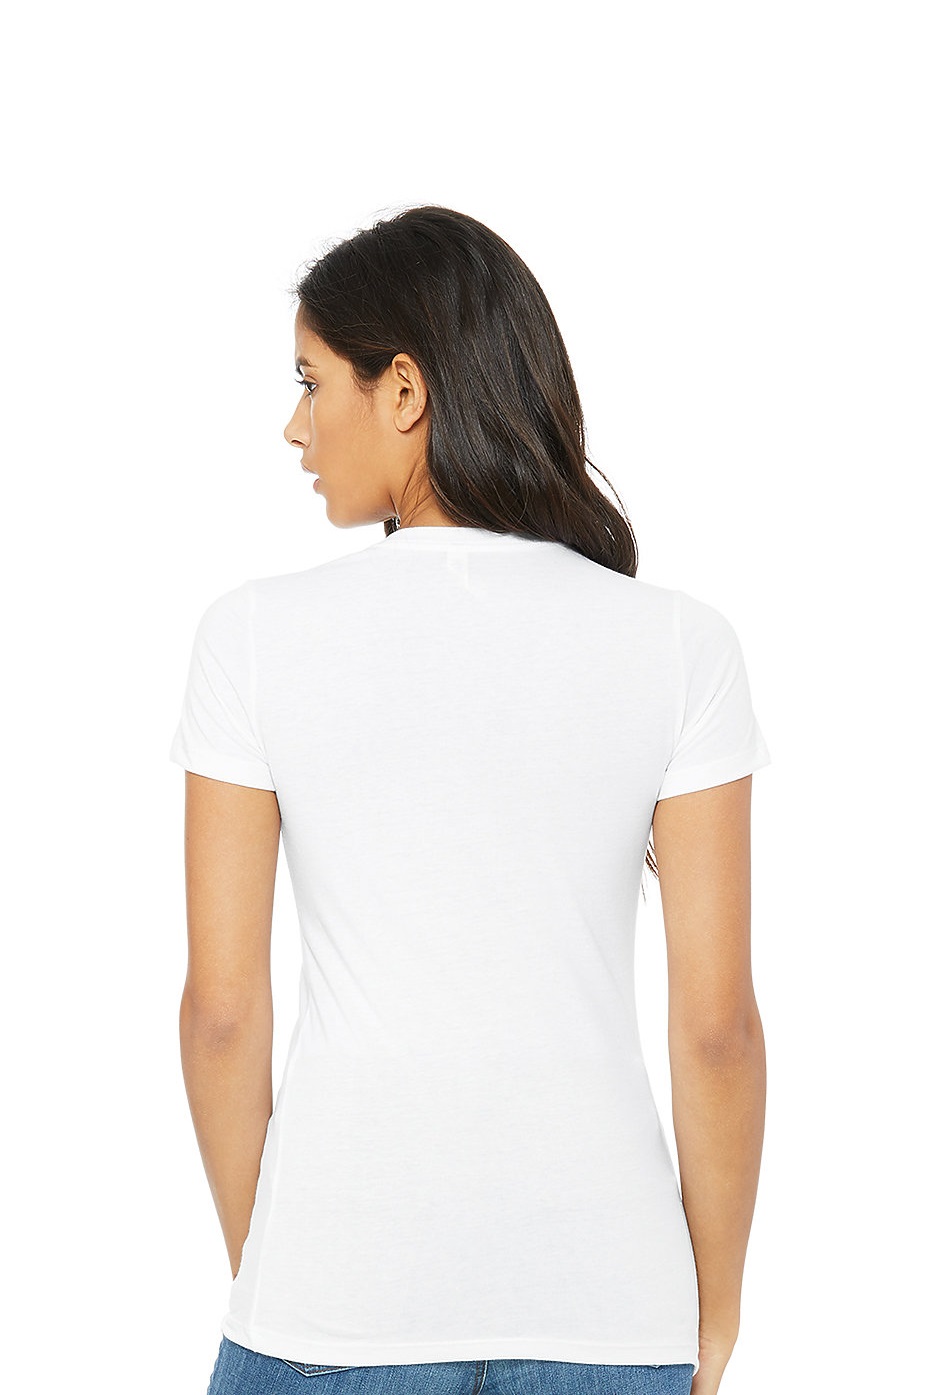 Bella Canvas 6004 Women's Slim Fit T-Shirt 4